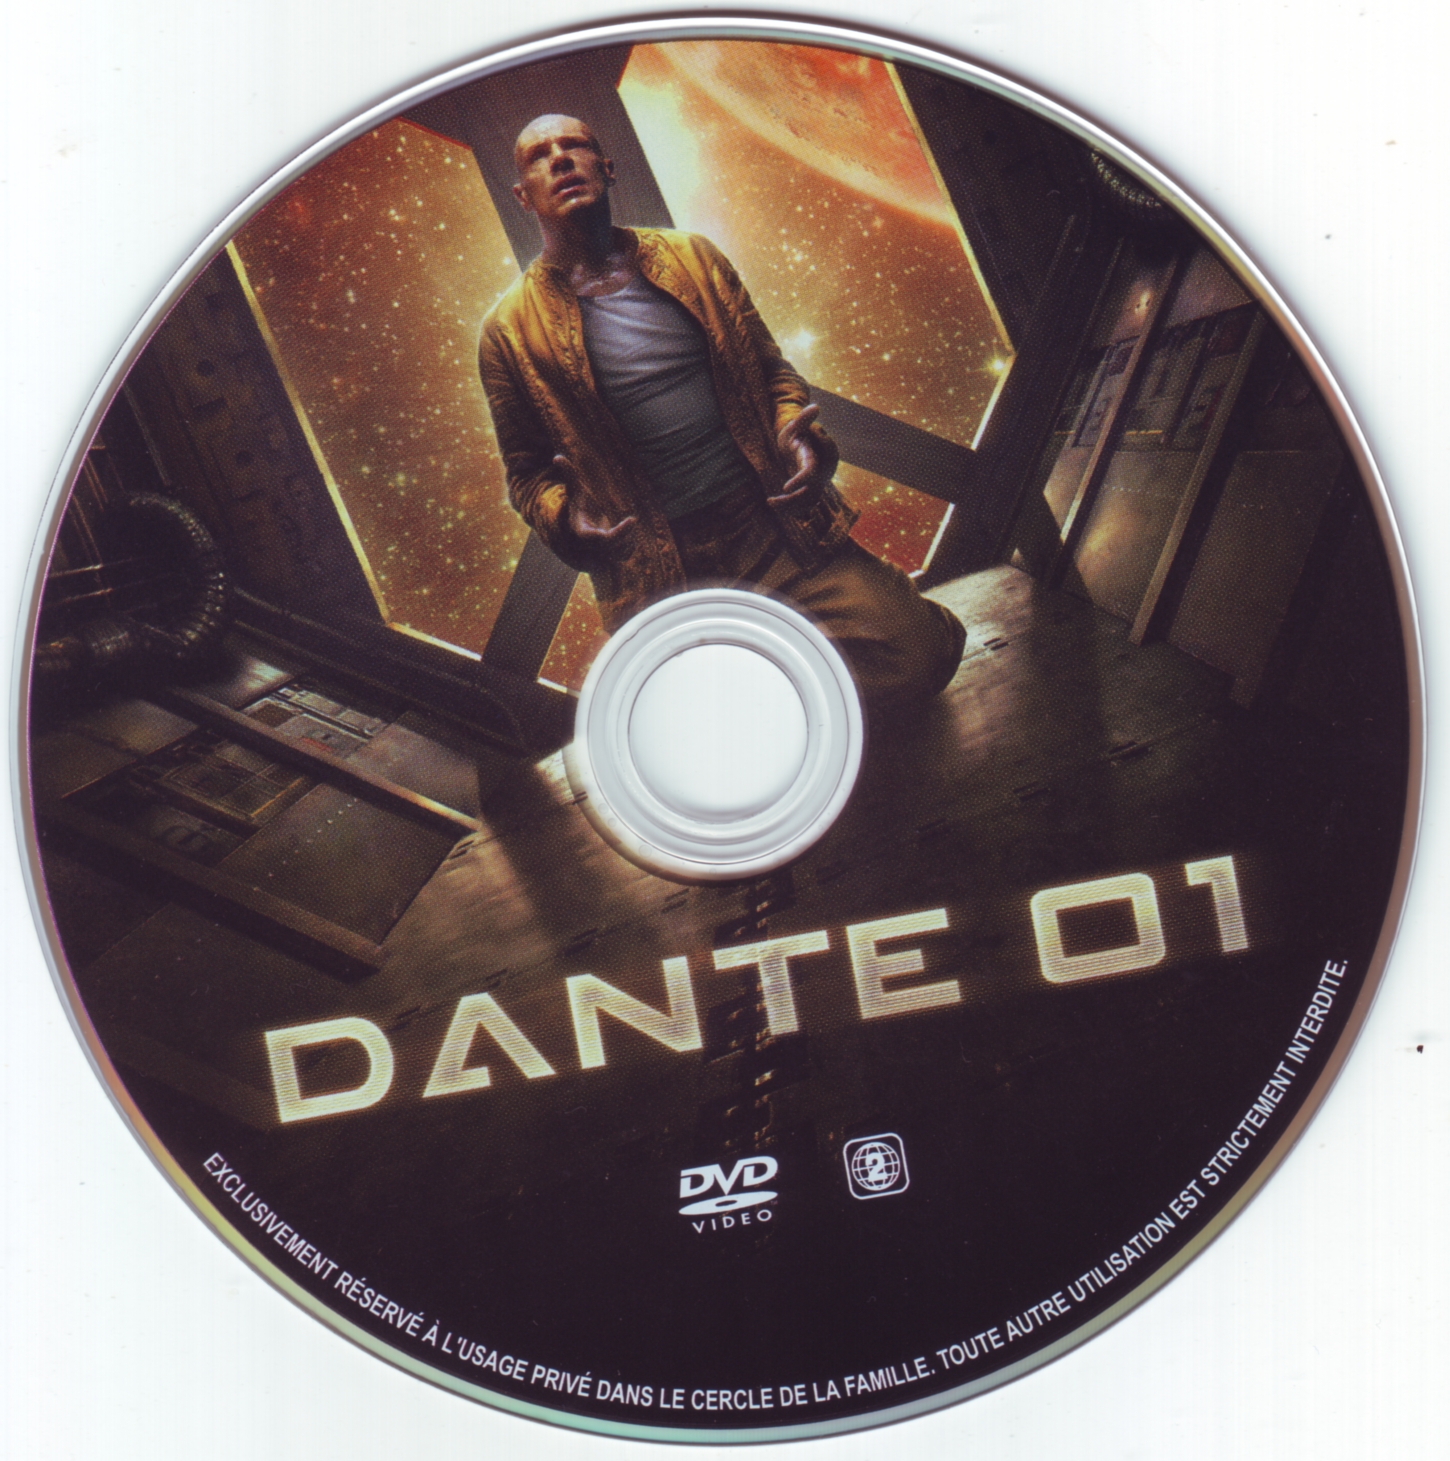 Dante 01 v3